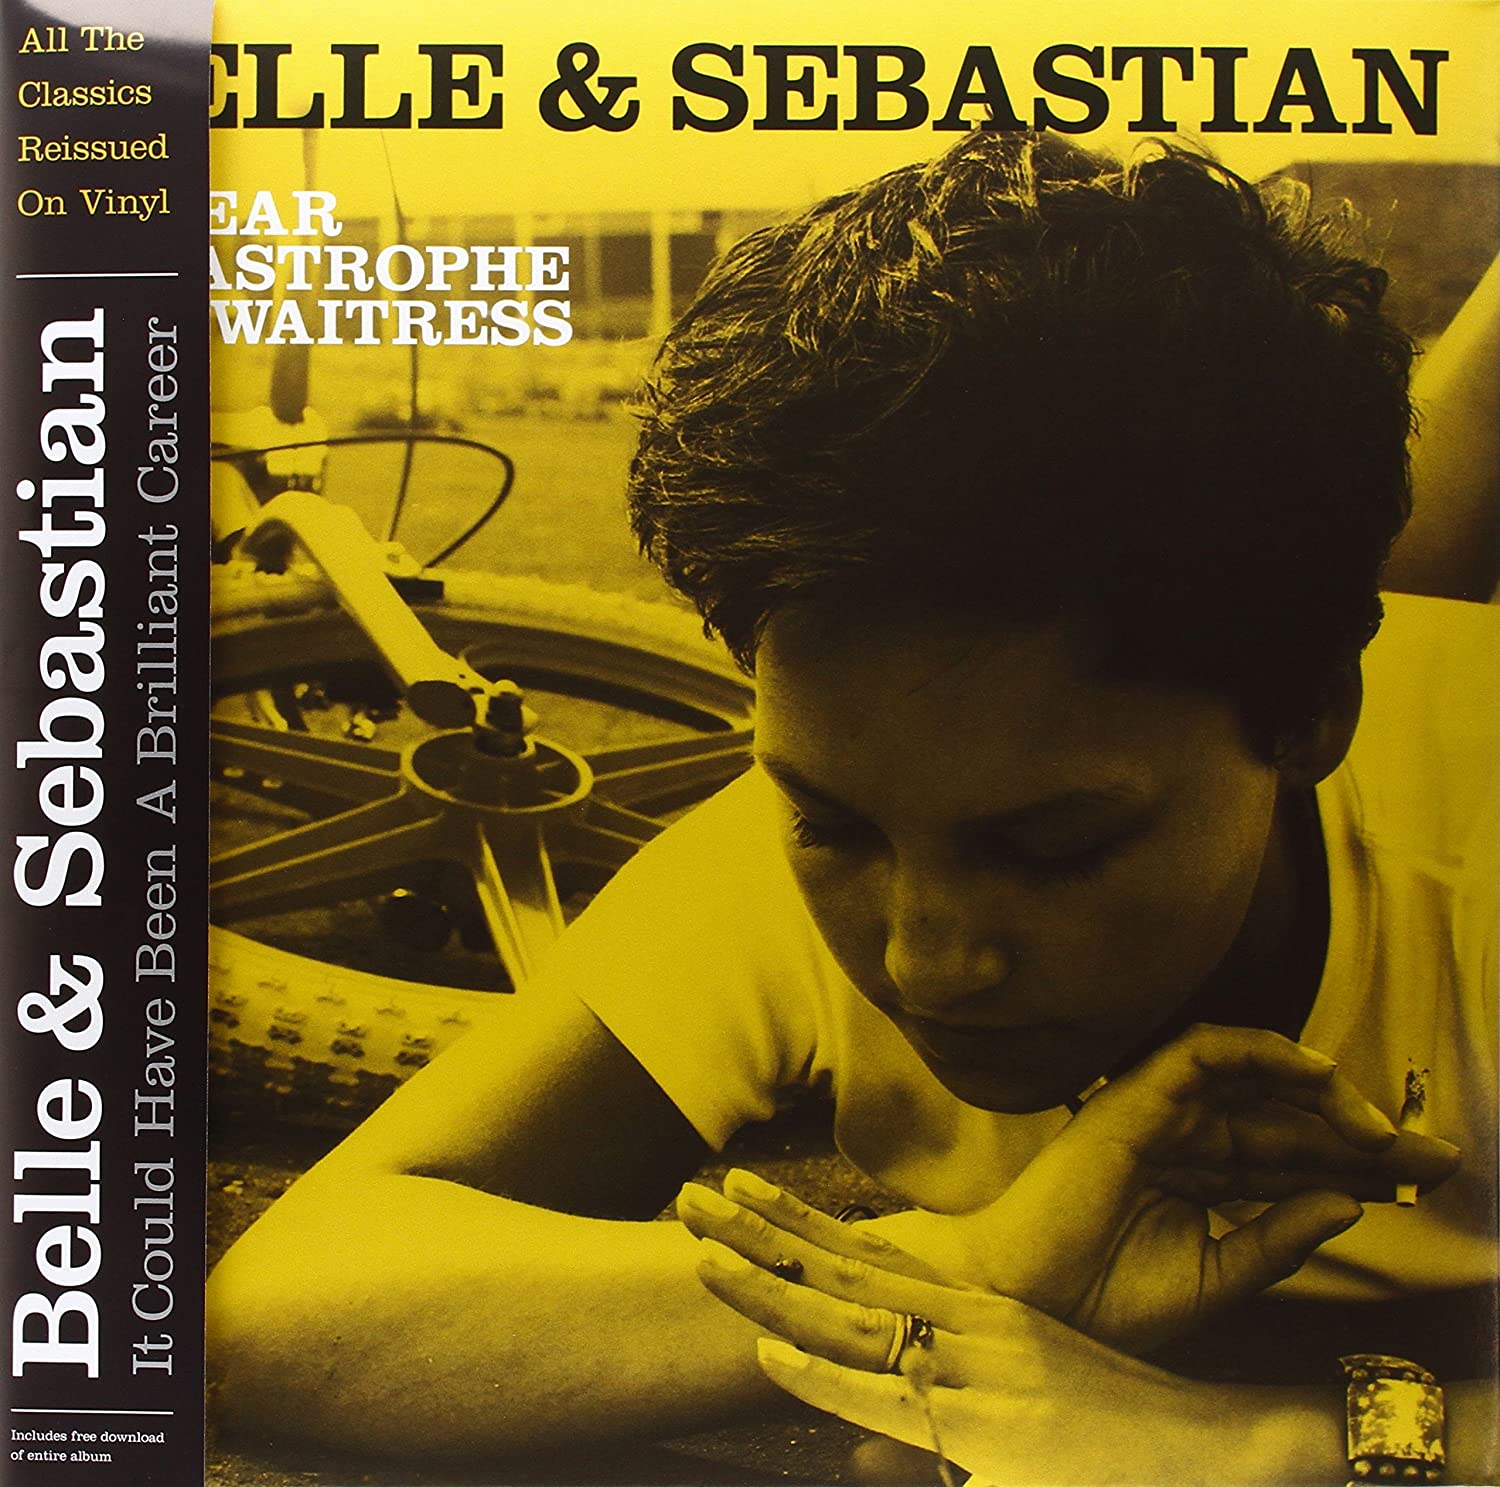 Belle and Sebastian "Dear Catastrophe Waitress" LP